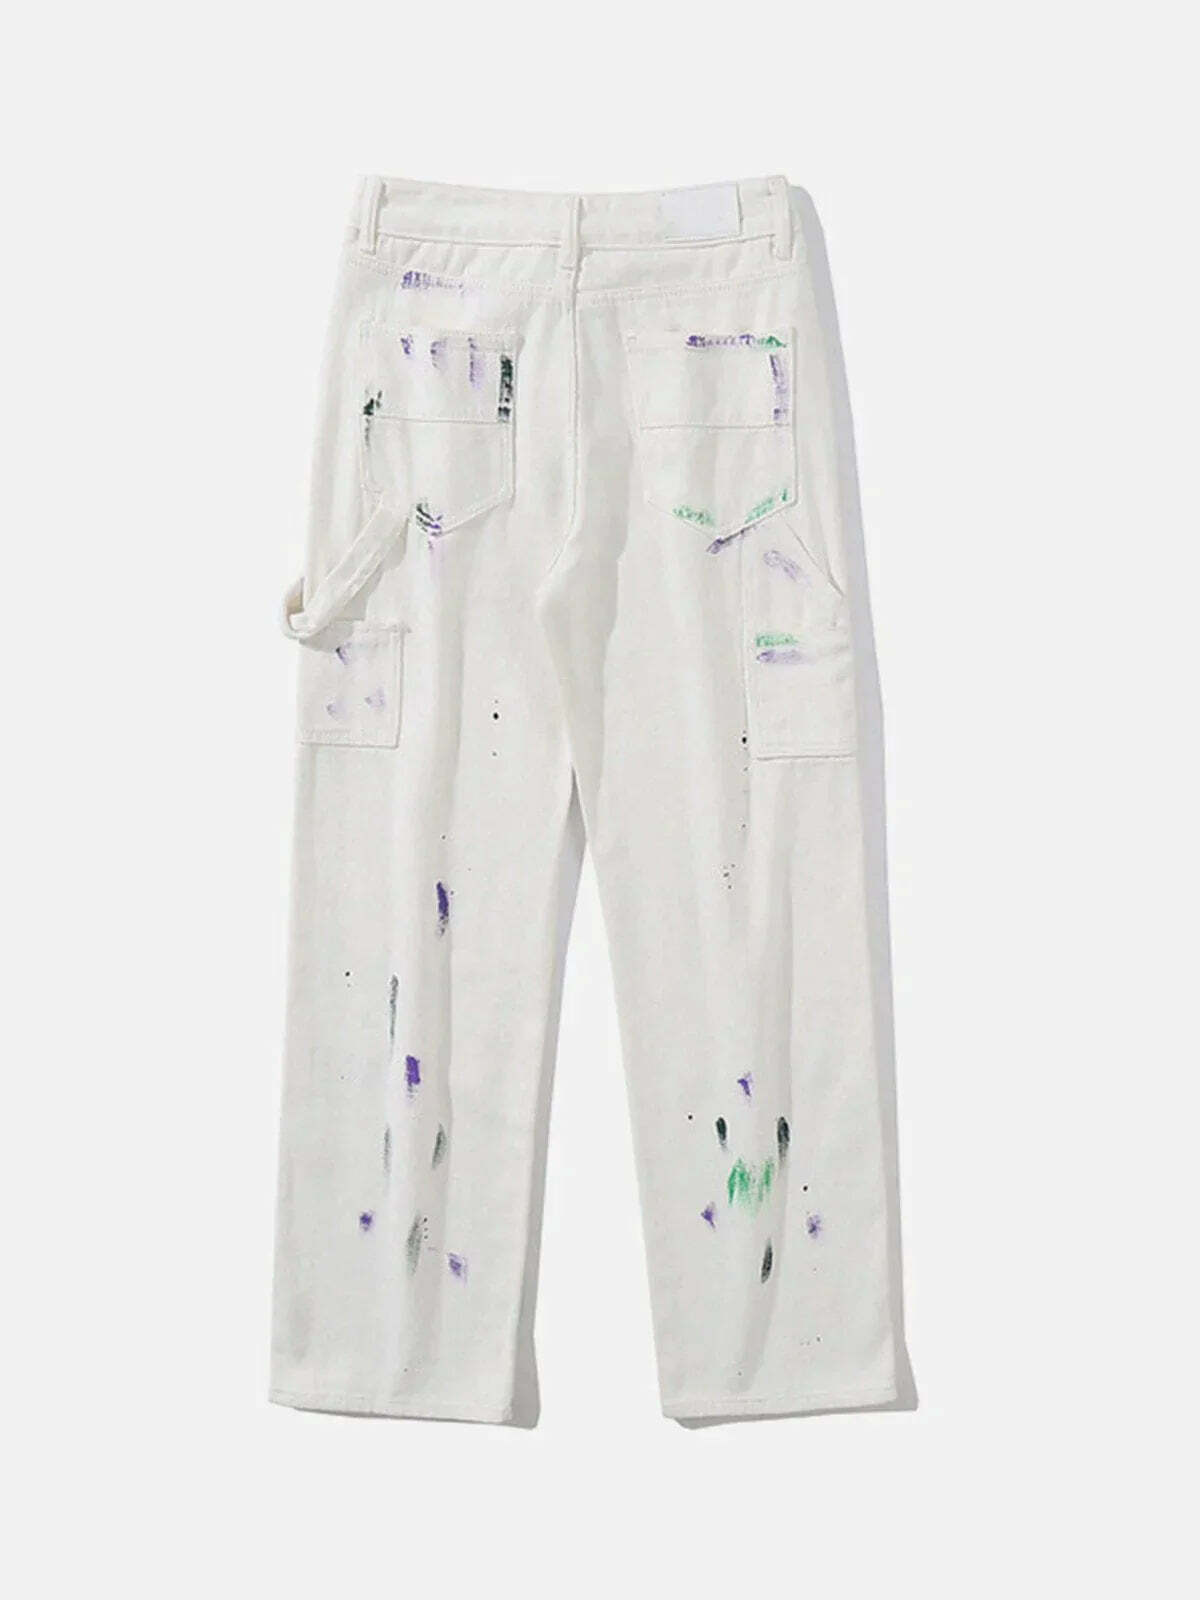 graffiti stitched jeans edgy & vibrant streetwear 8788